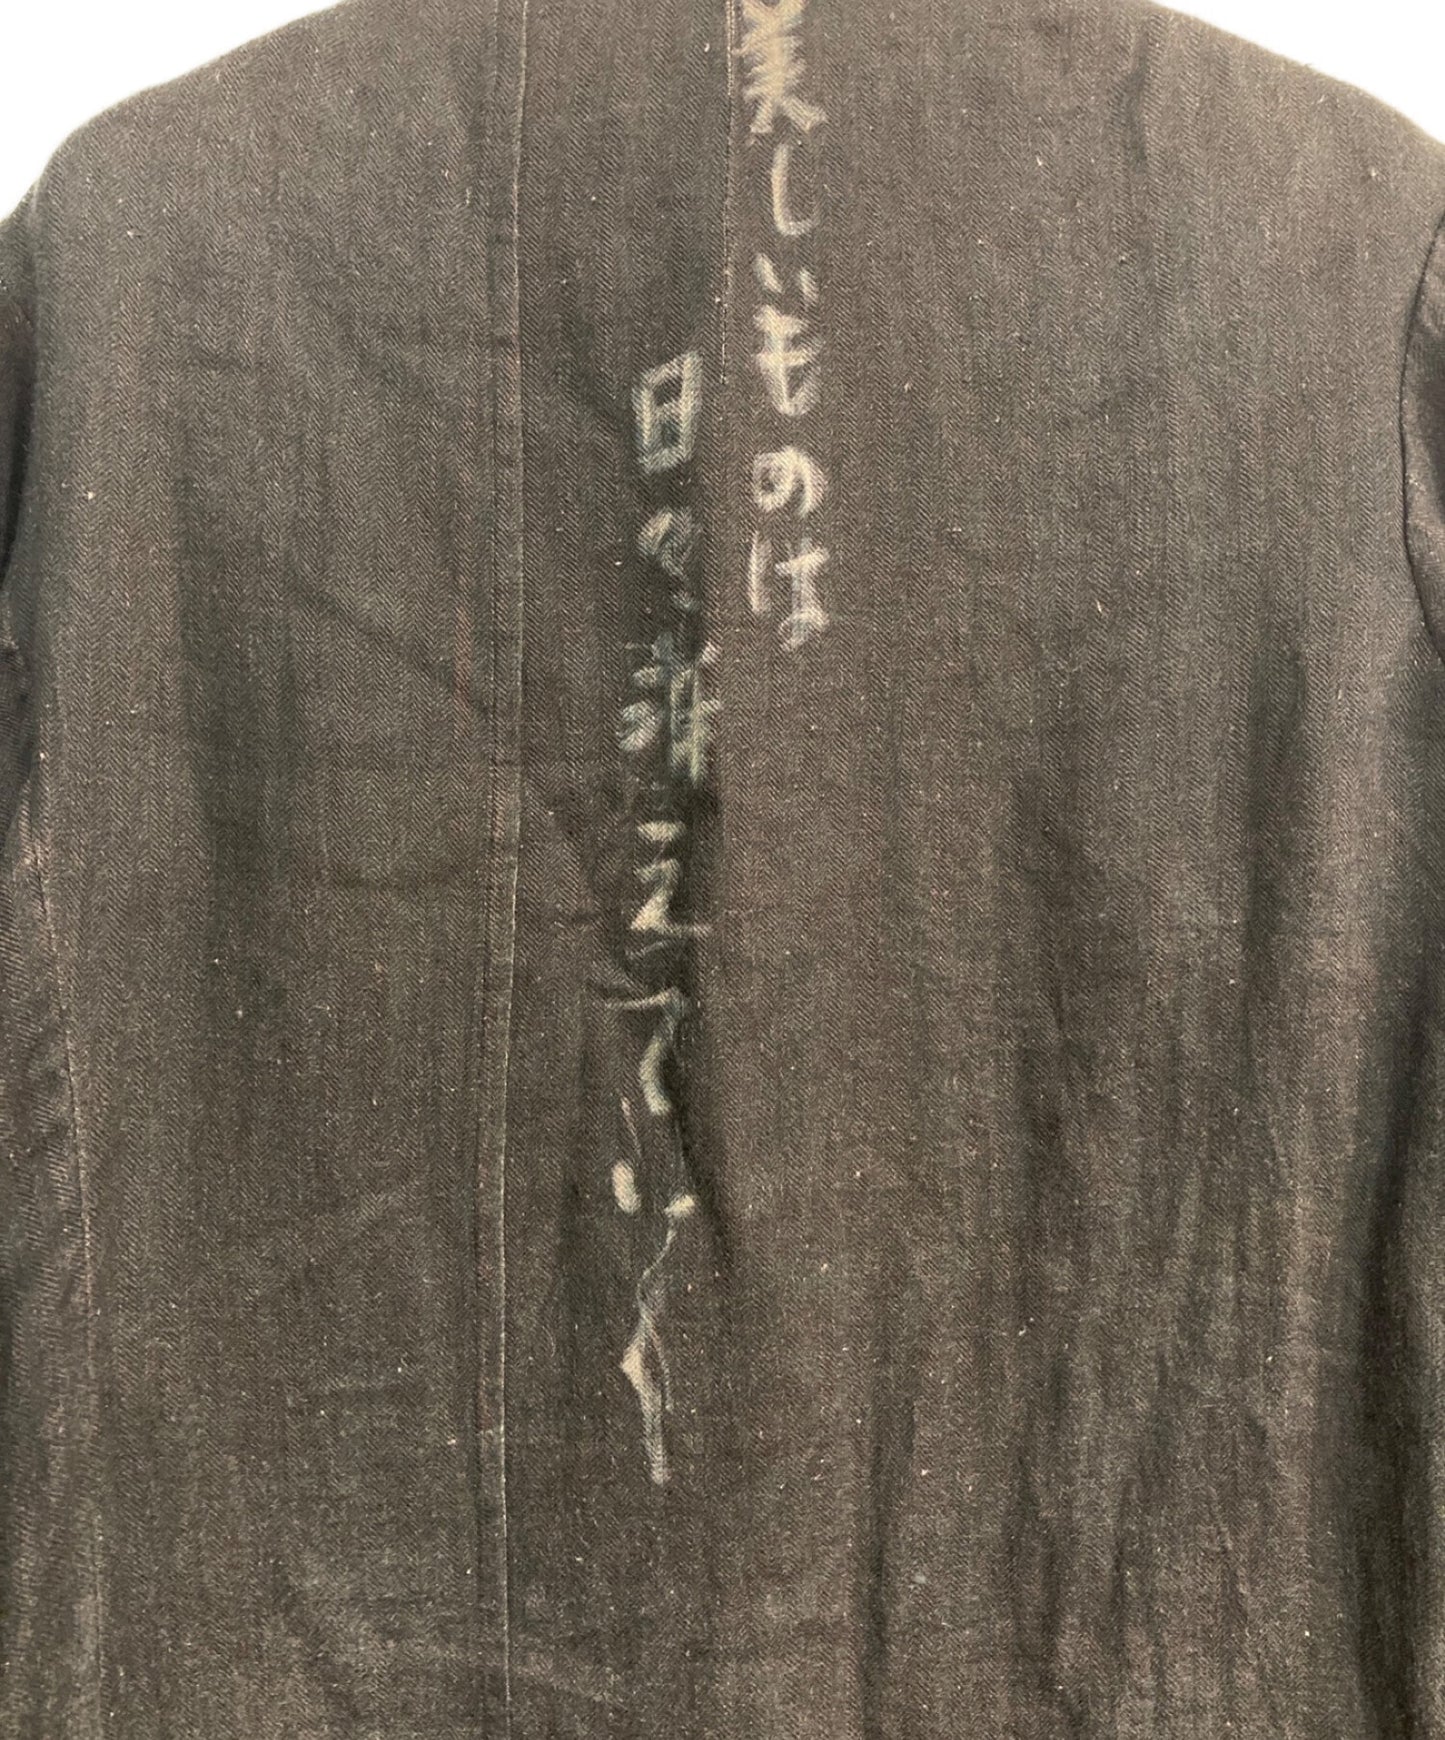 Yohji Yamamoto Pour Homme 20ss ดูหมายเลข 1 P คู่ด้านหน้าคู่ยาว HN-D17-816 สิ่งสวยงามหายไปทุกวัน HN-D17-816